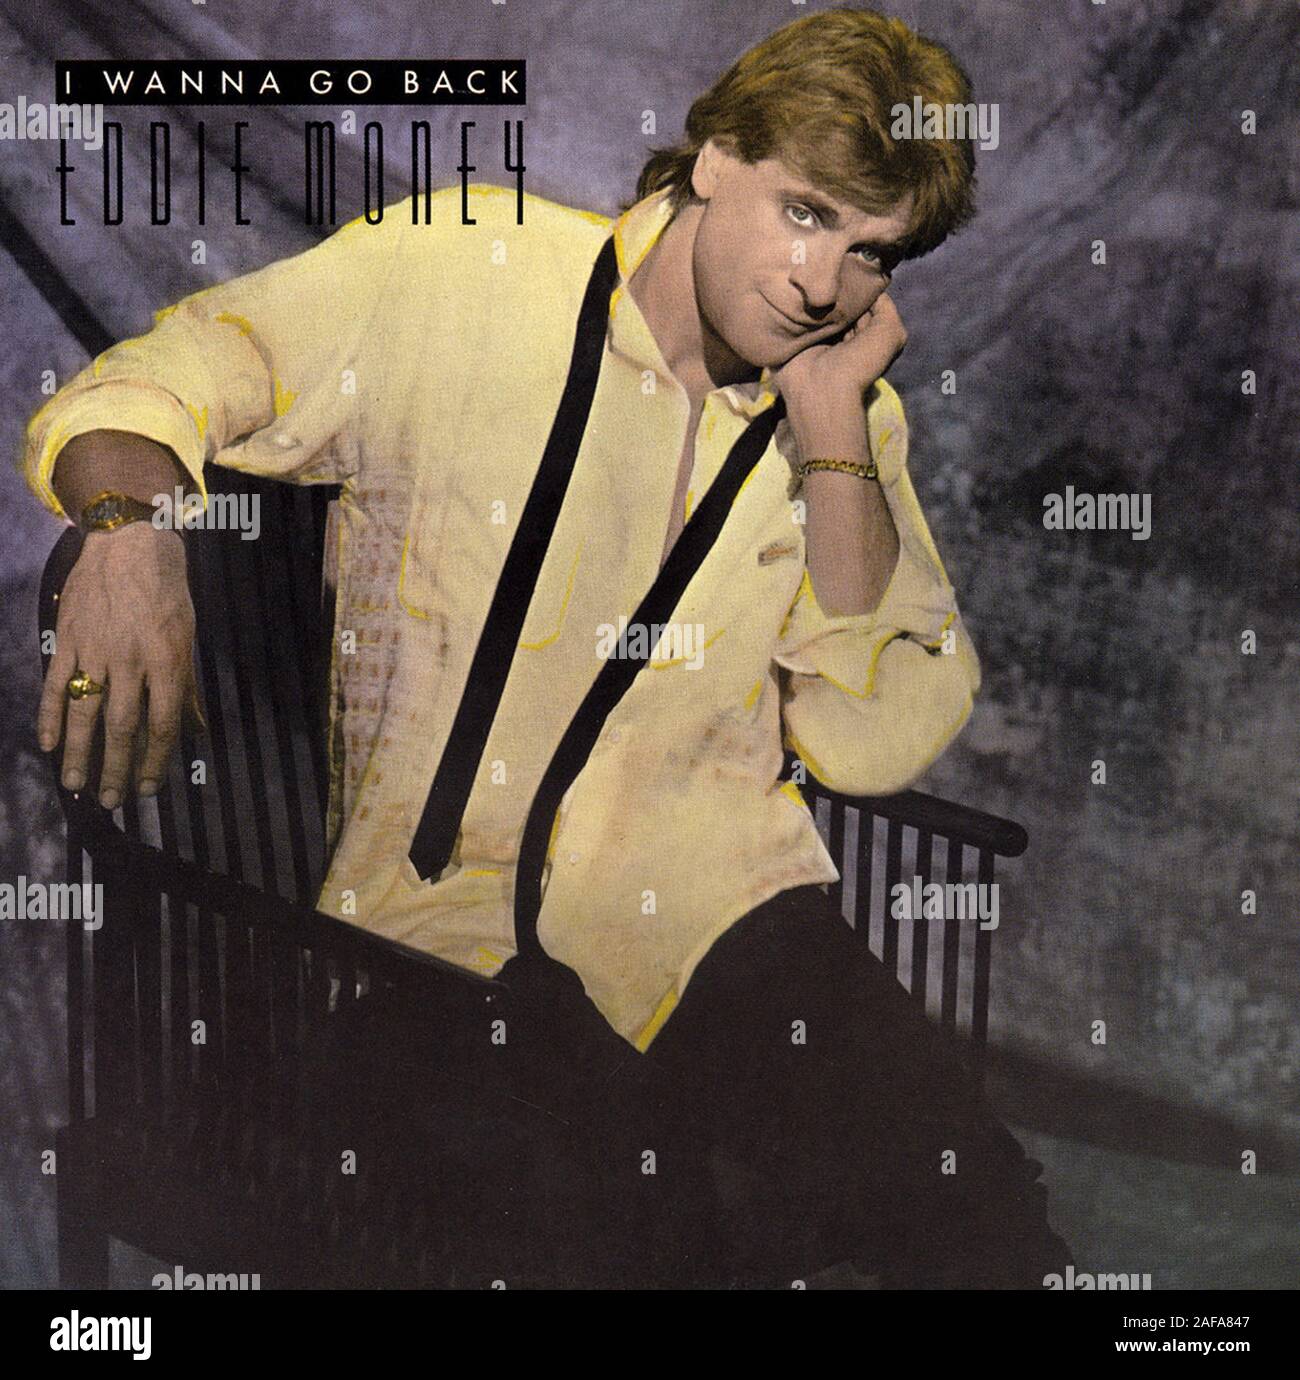 Eddie Money - I Wanna Go Back - Vintage vinyl album cover Stock Photo